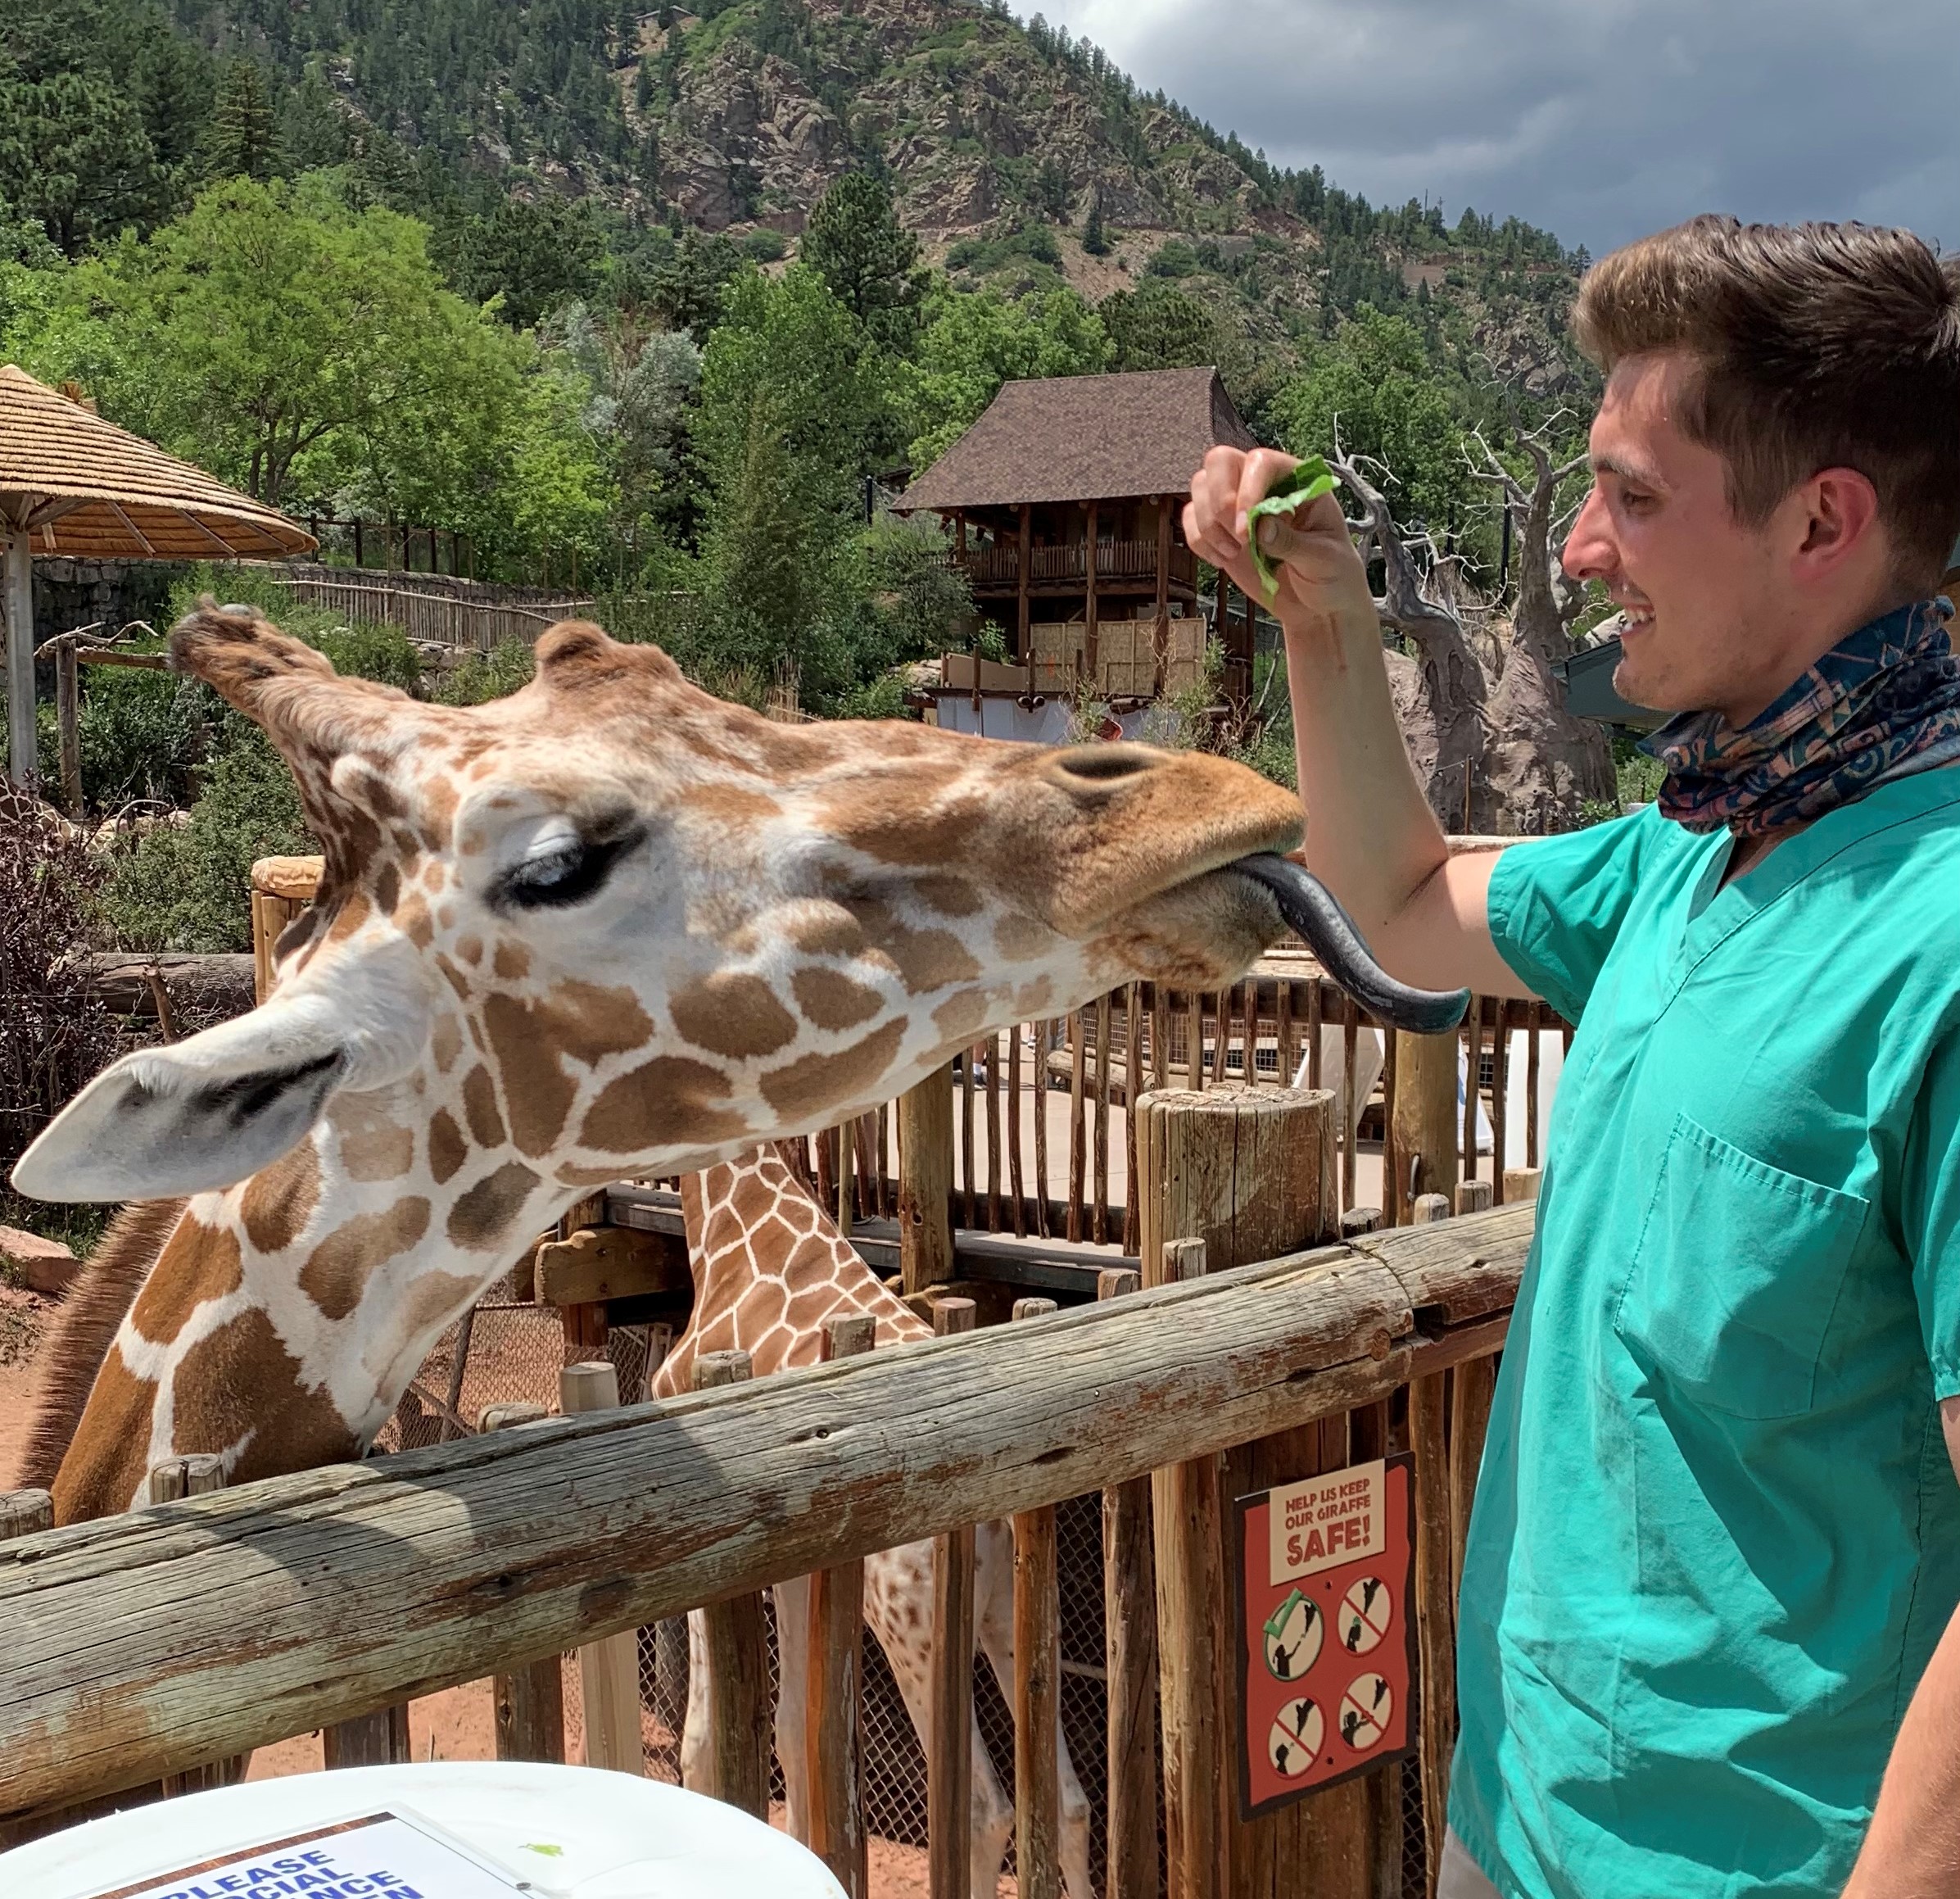 Zack Dvornicky-Raymond shown with a giraffe